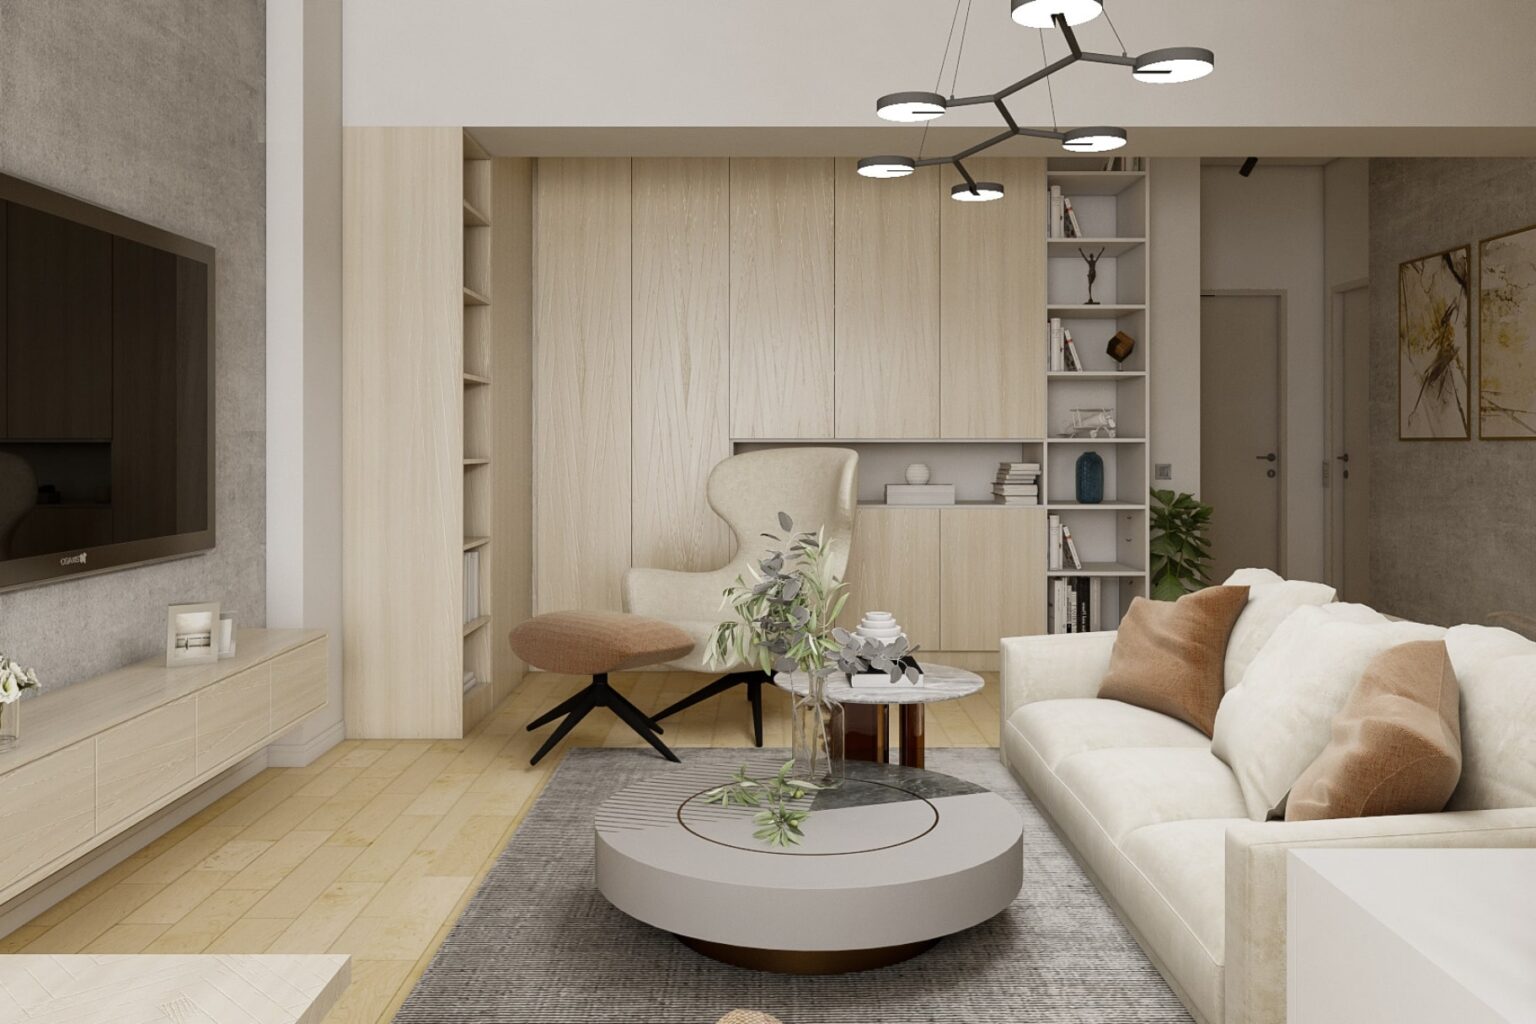 Amenajare living mare de tip open space cu o canapea mare, o masuta de cafea si un televizor LED integrat in perete.